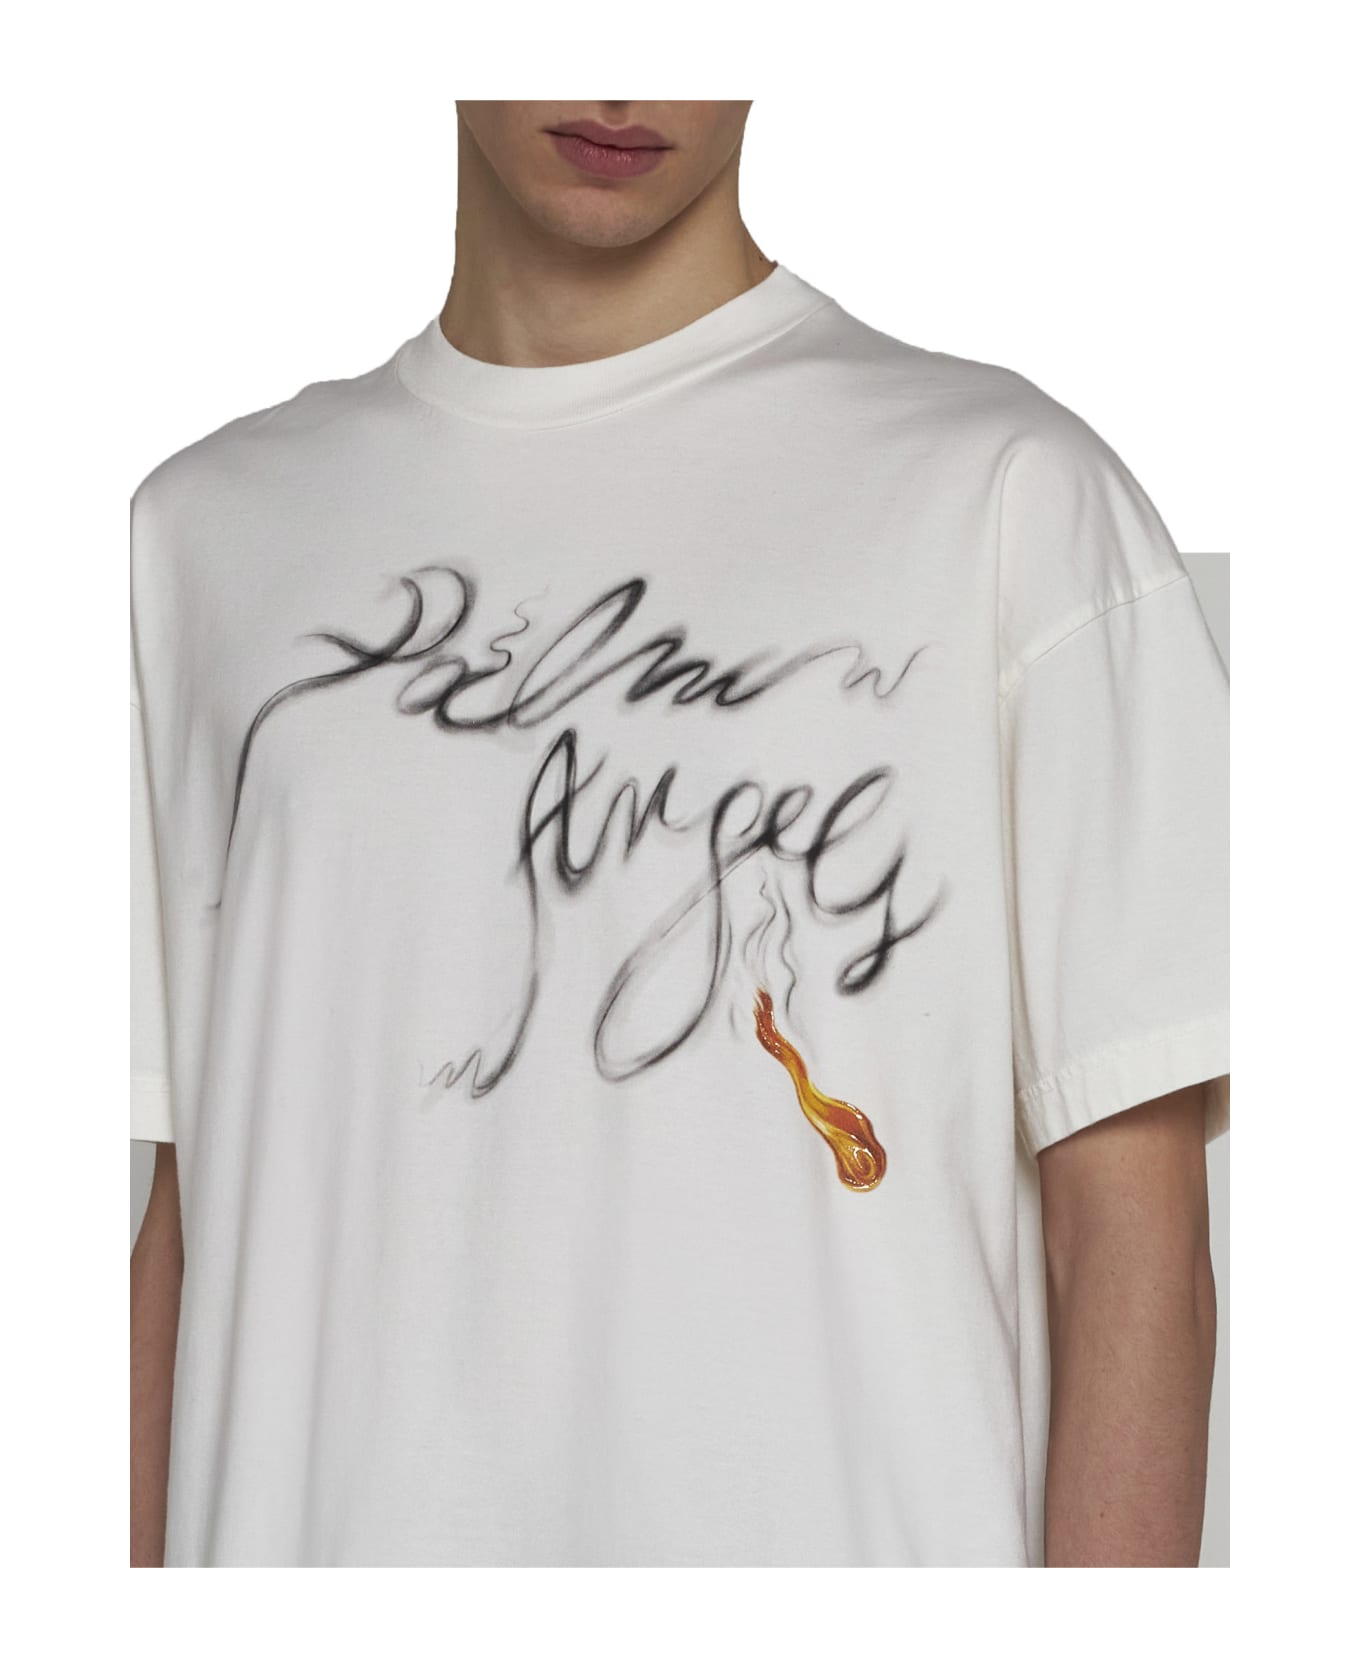 Palm Angels Foggy Pa T-shirt - Off White Black シャツ